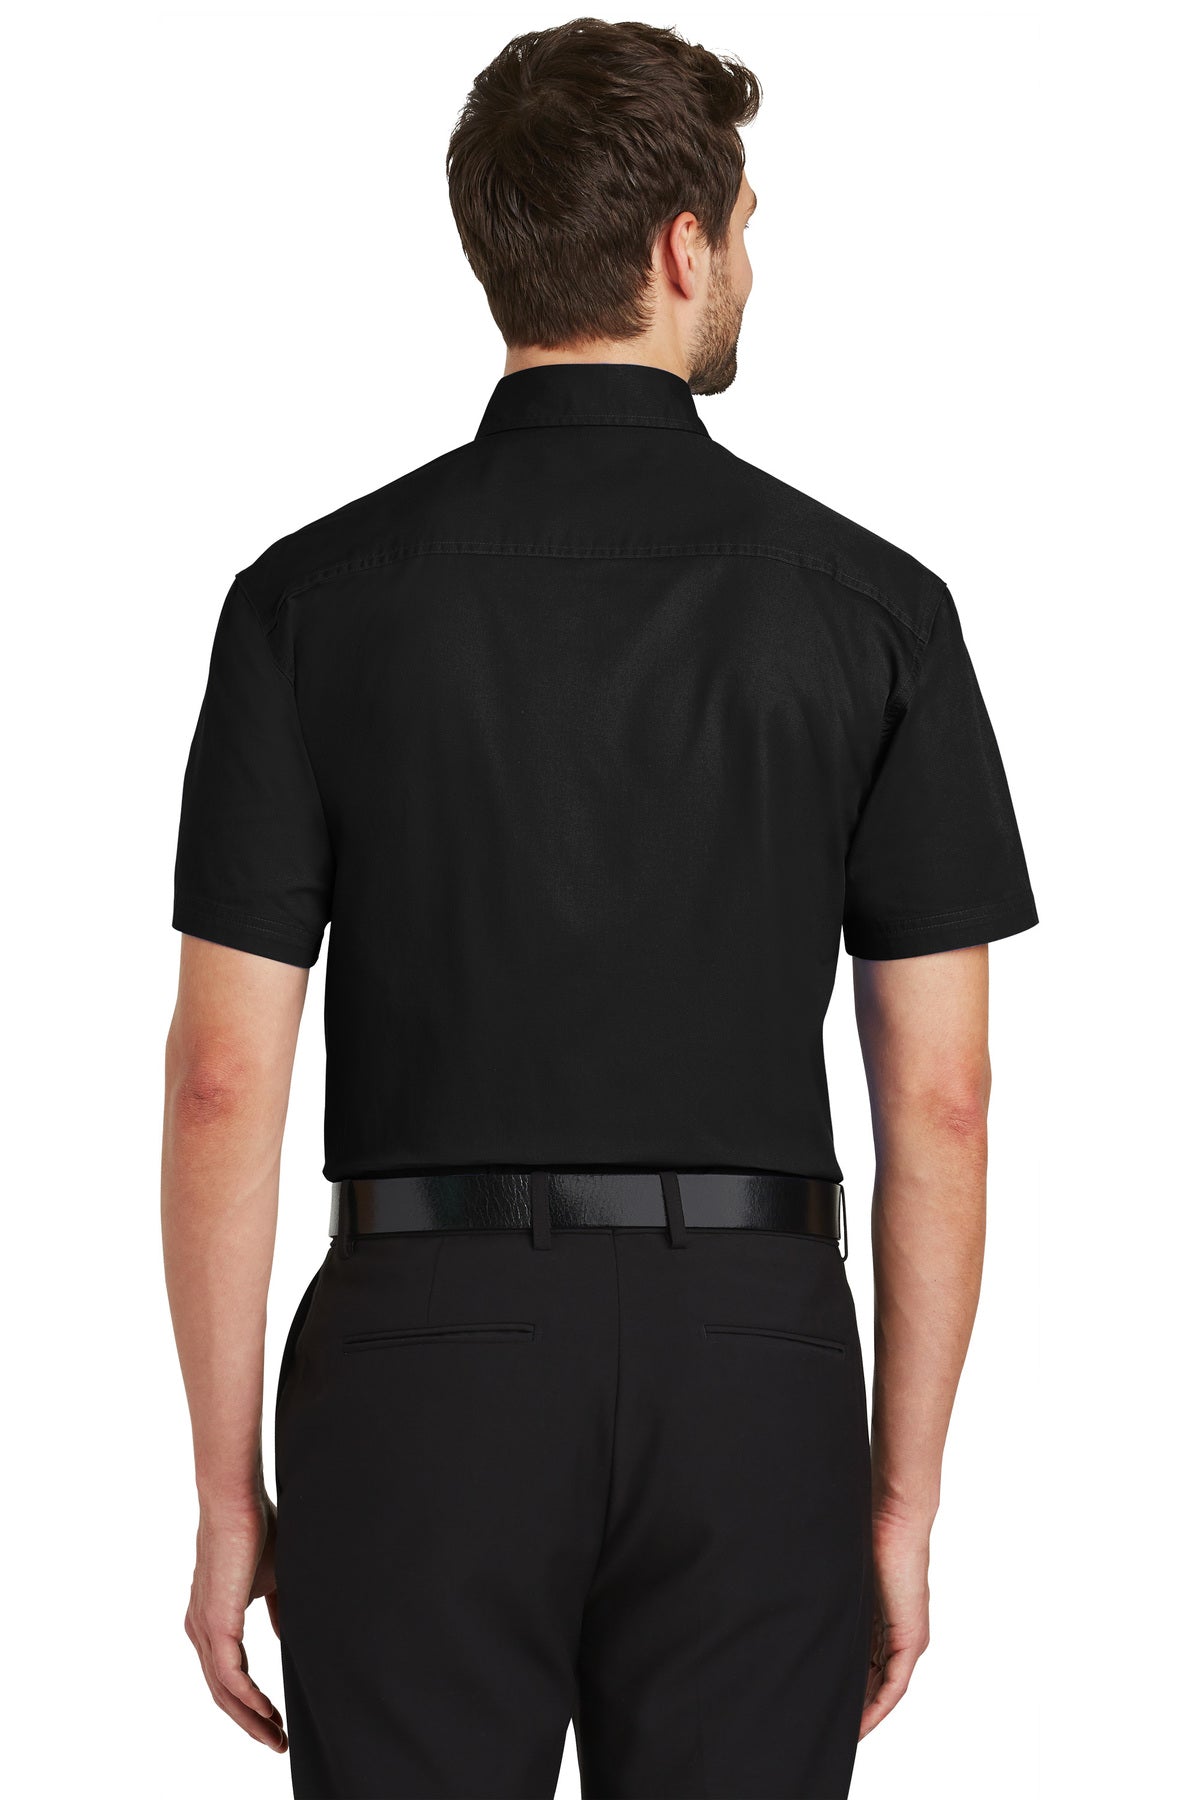 Port Authority Short Sleeve Custom Twill Shirts, Black